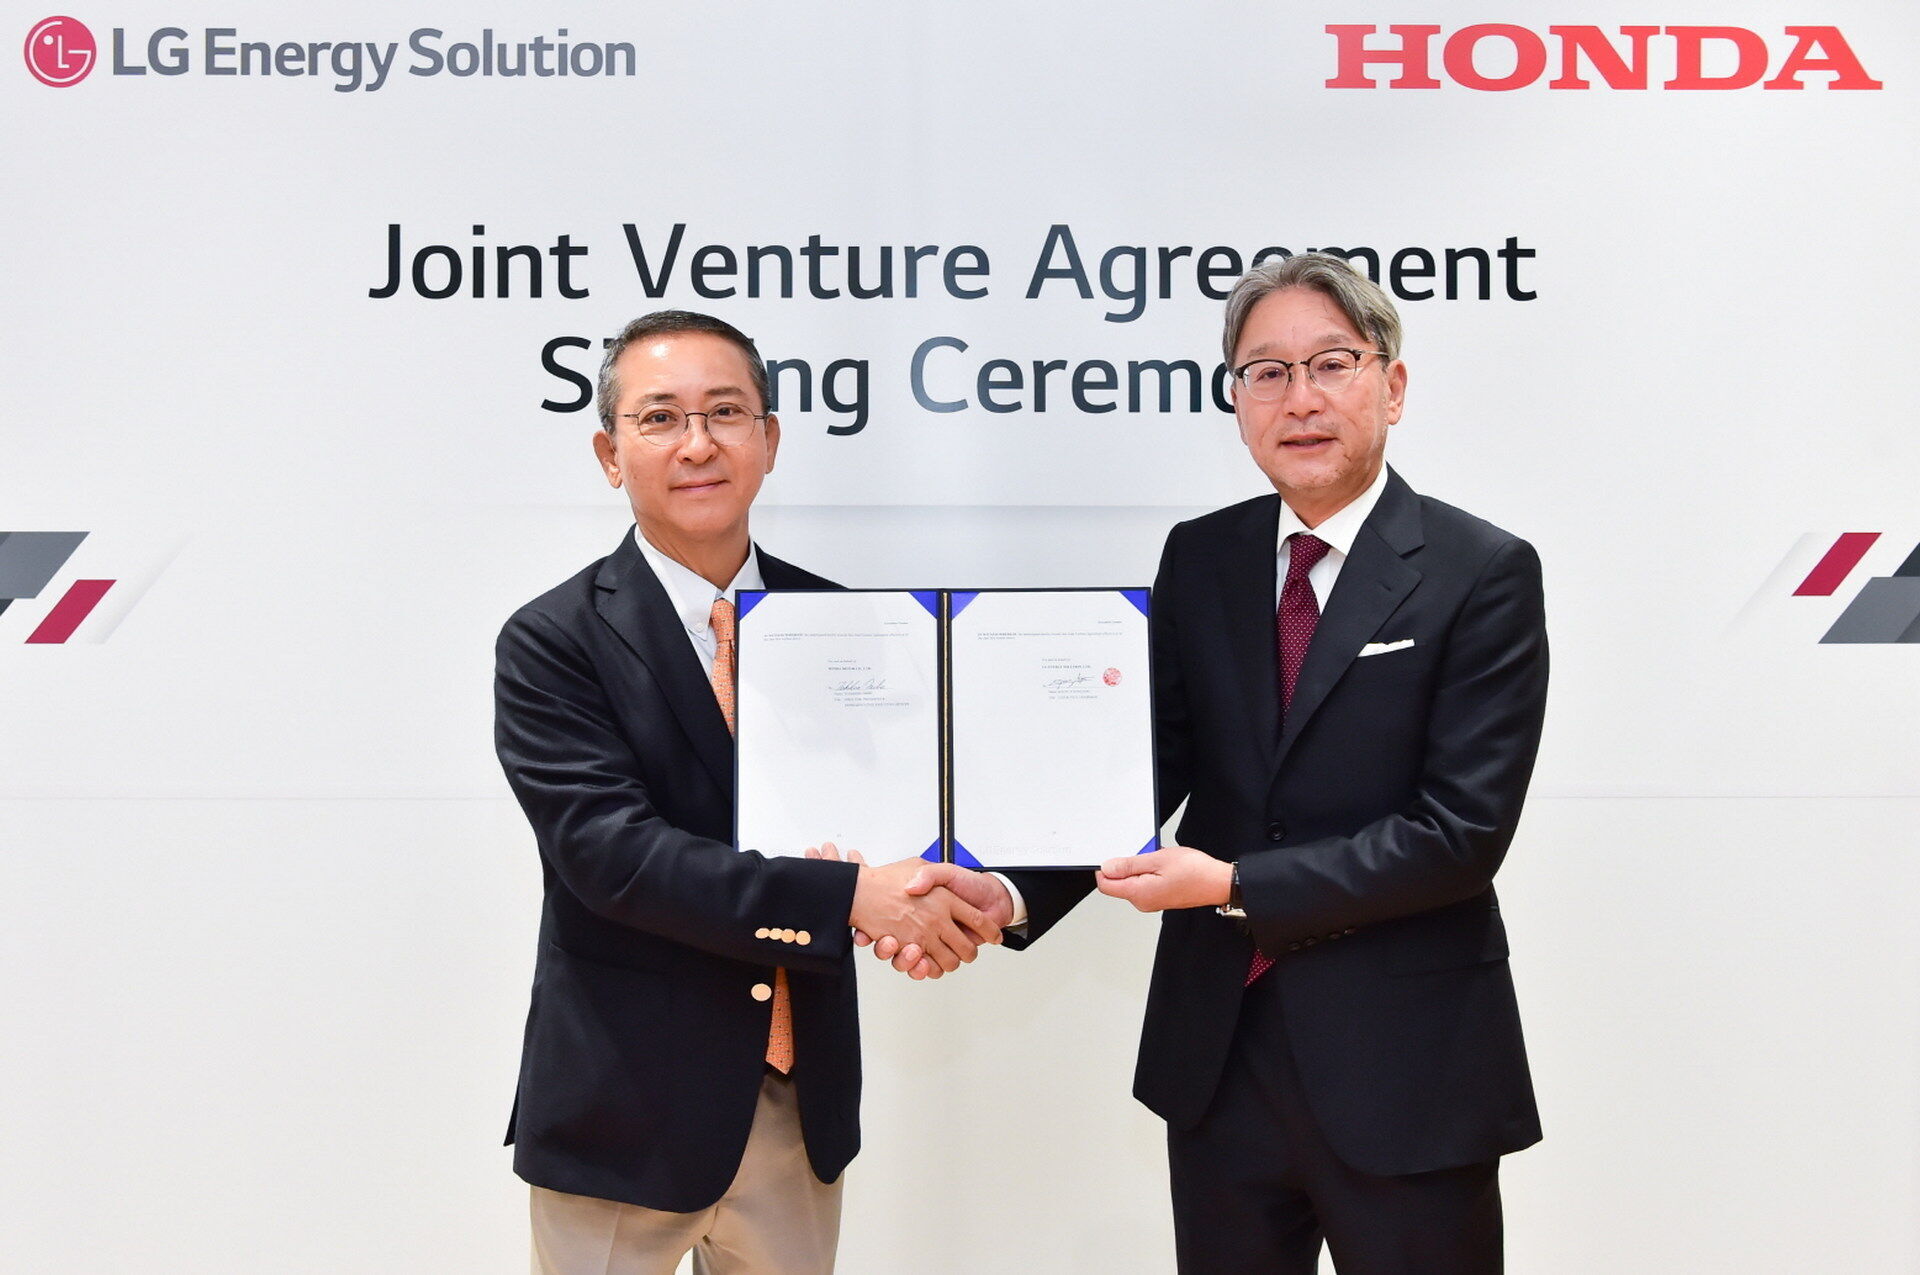 Договор о создании СП подписали руководители LG Energy Solution Ен Су Квон и Honda Тоcихиро Мибе